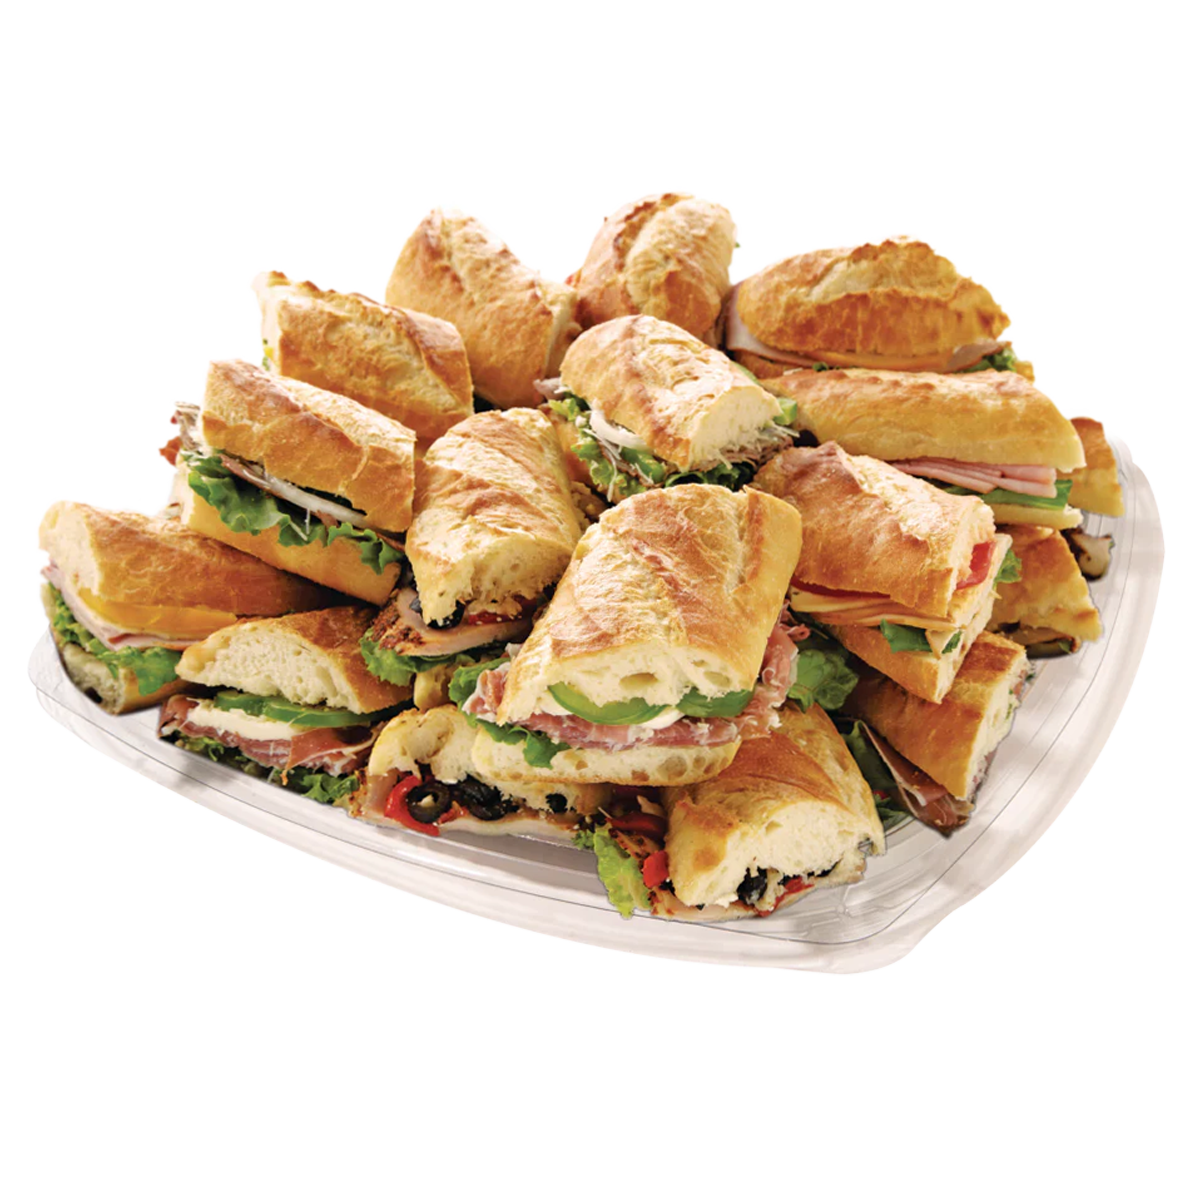 61. Artisan Baguette Sandwiches